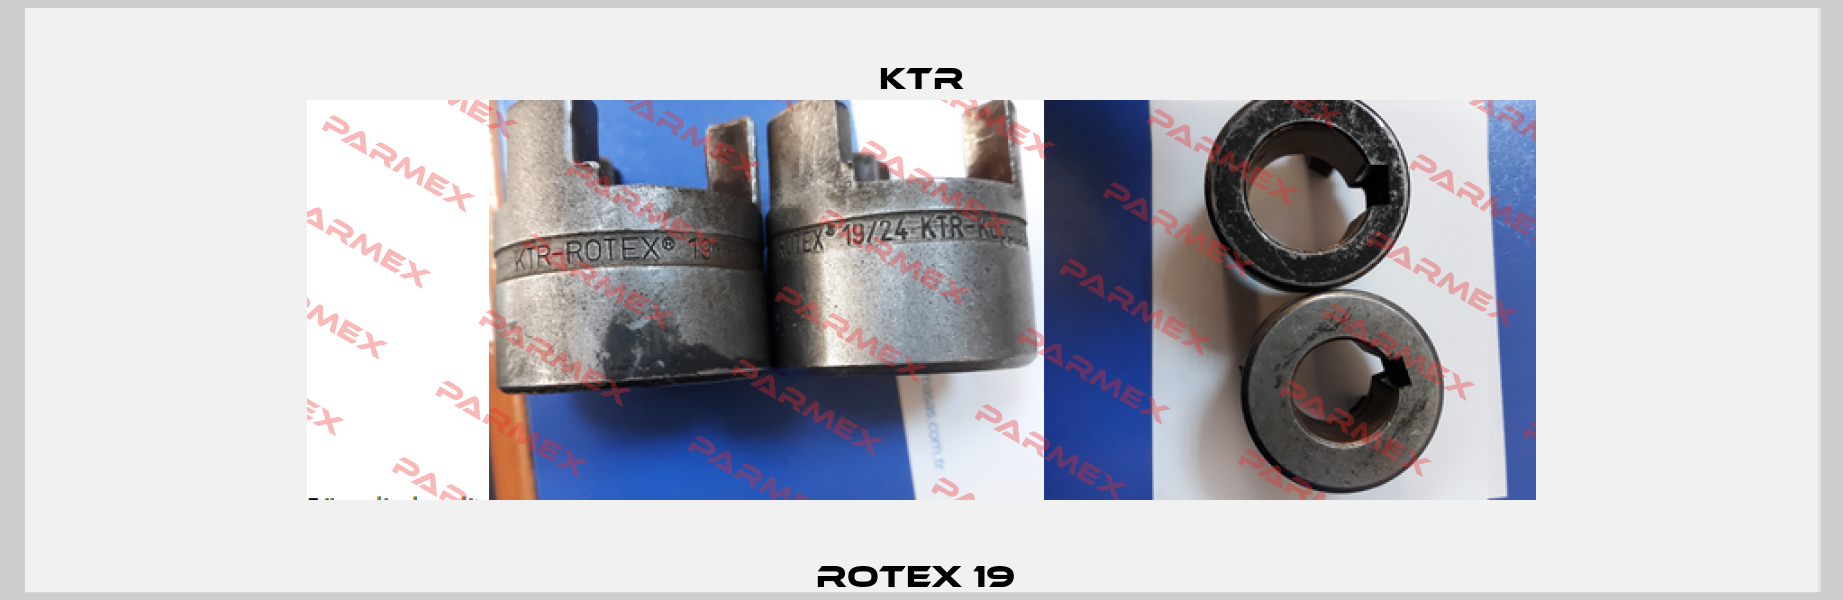 Rotex 19  KTR